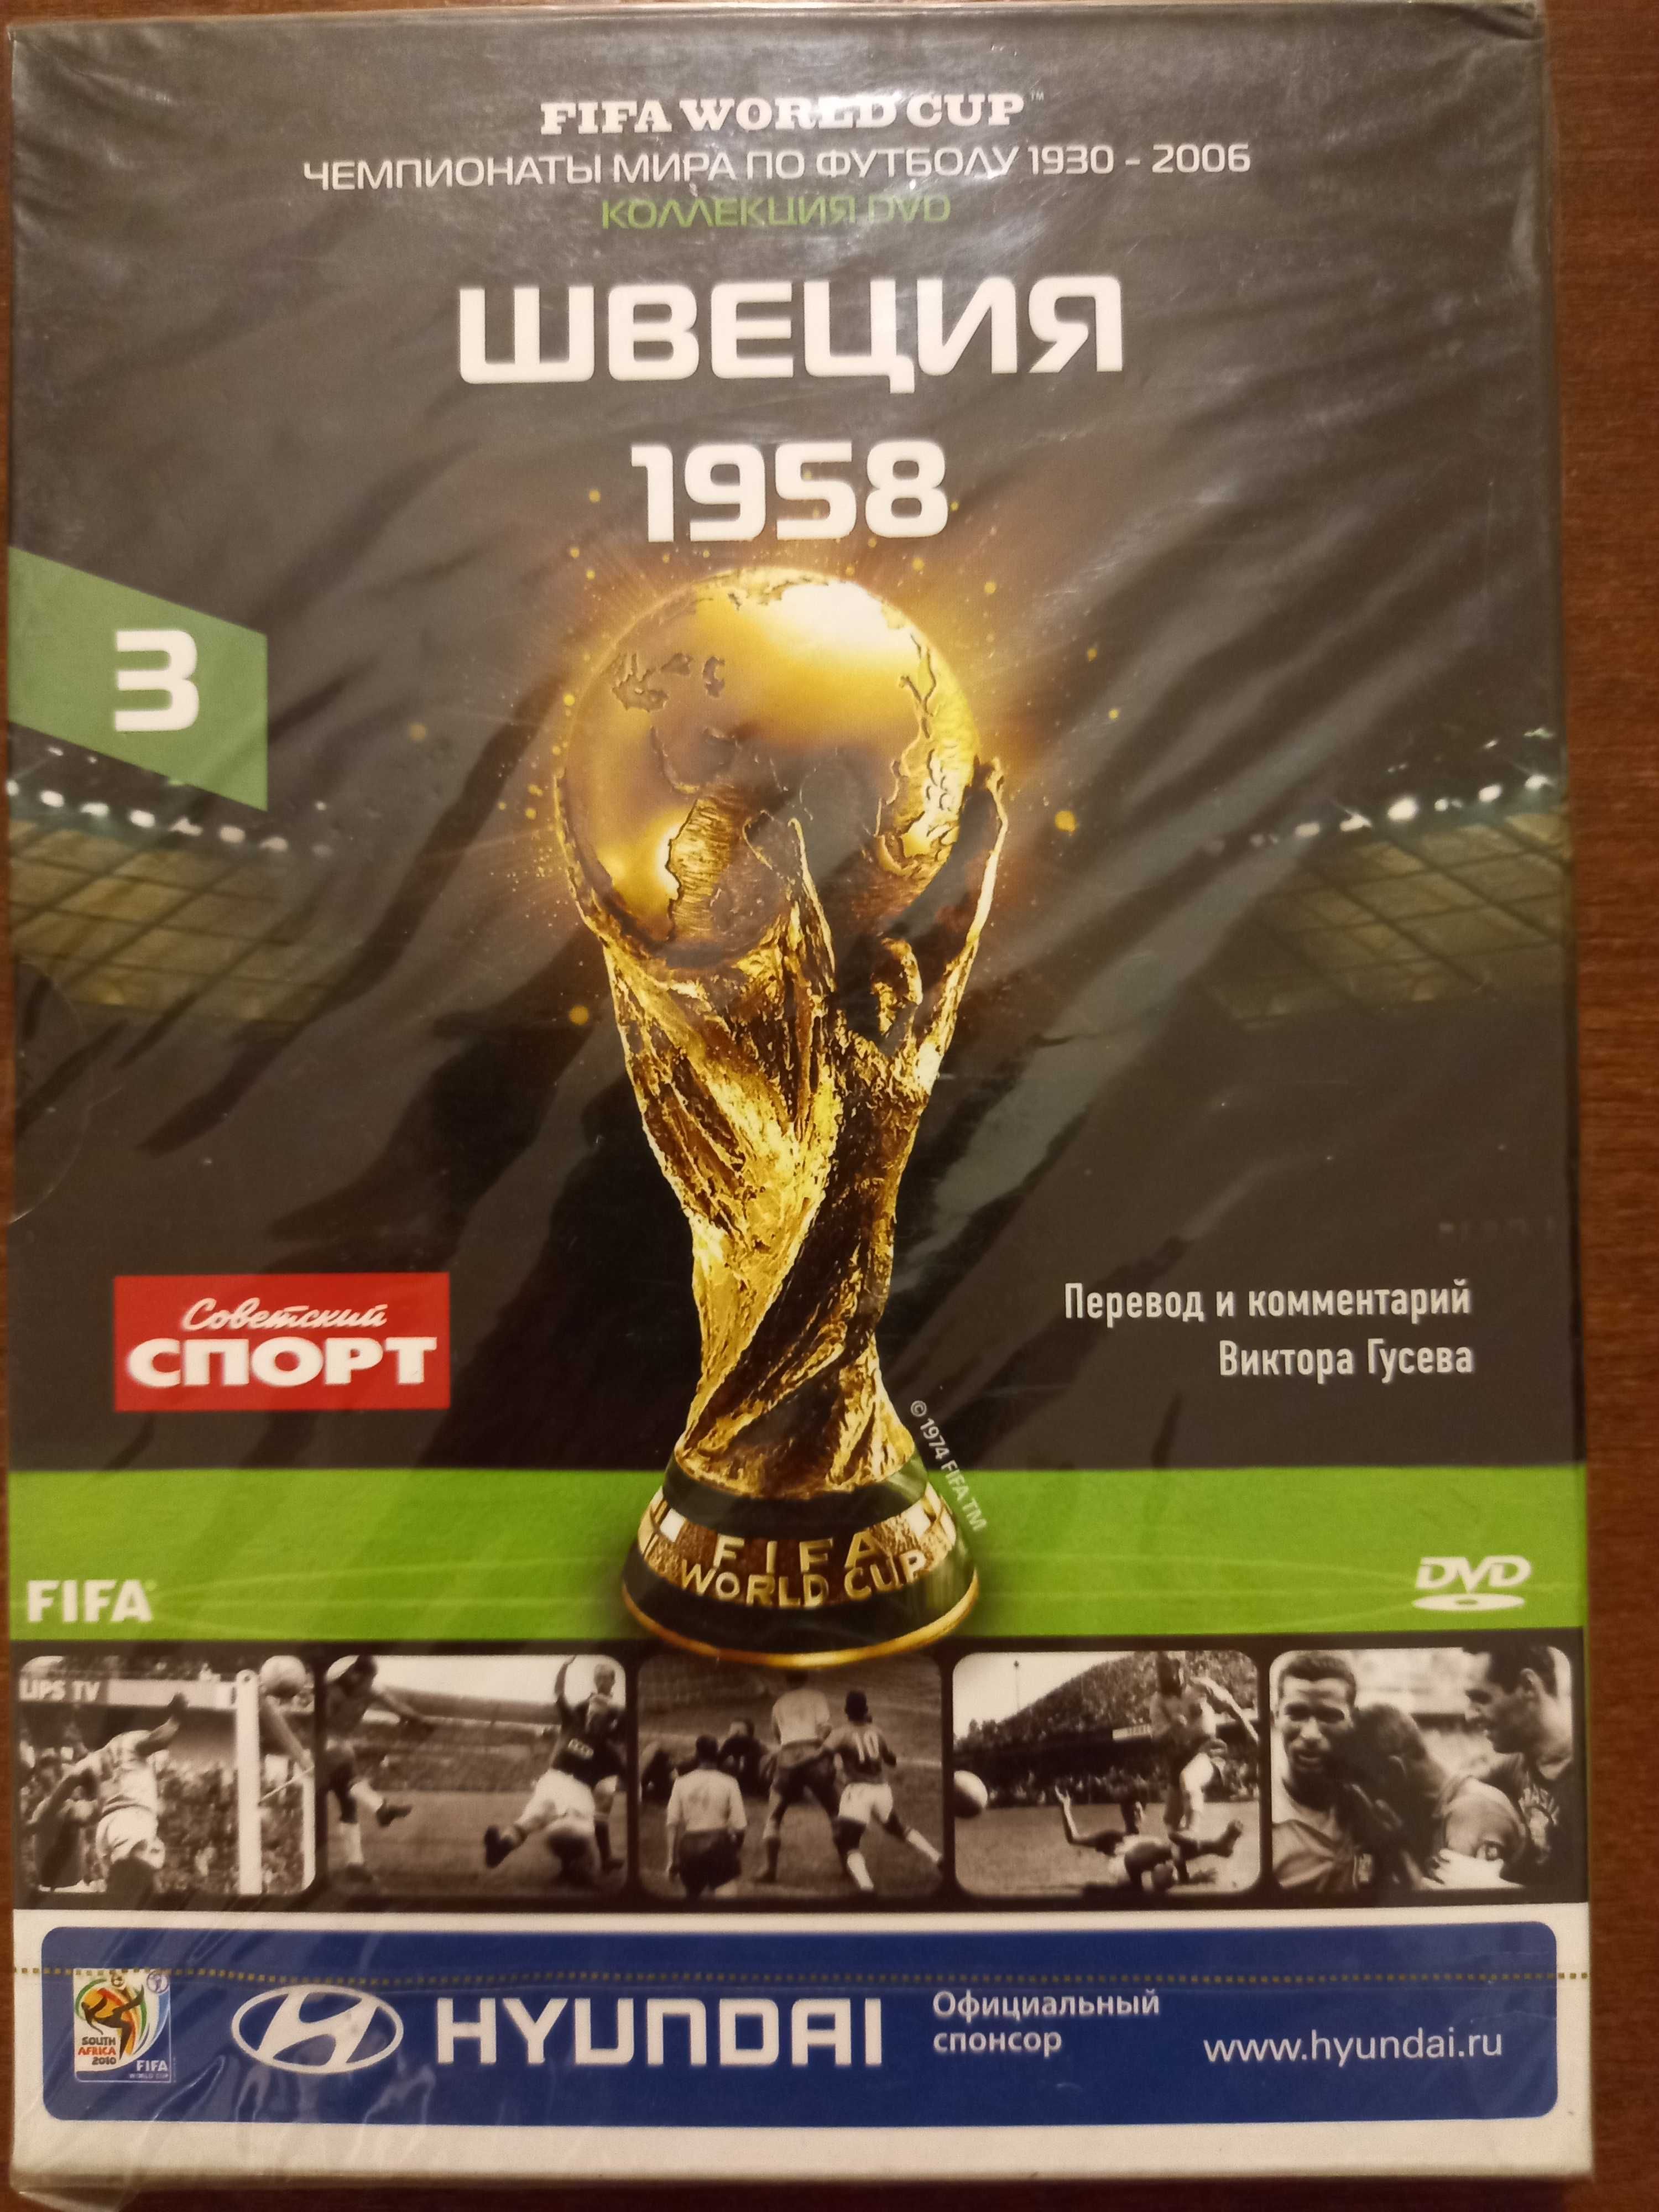 DVD из коллекции FIFA World Cup. Швеция 1958